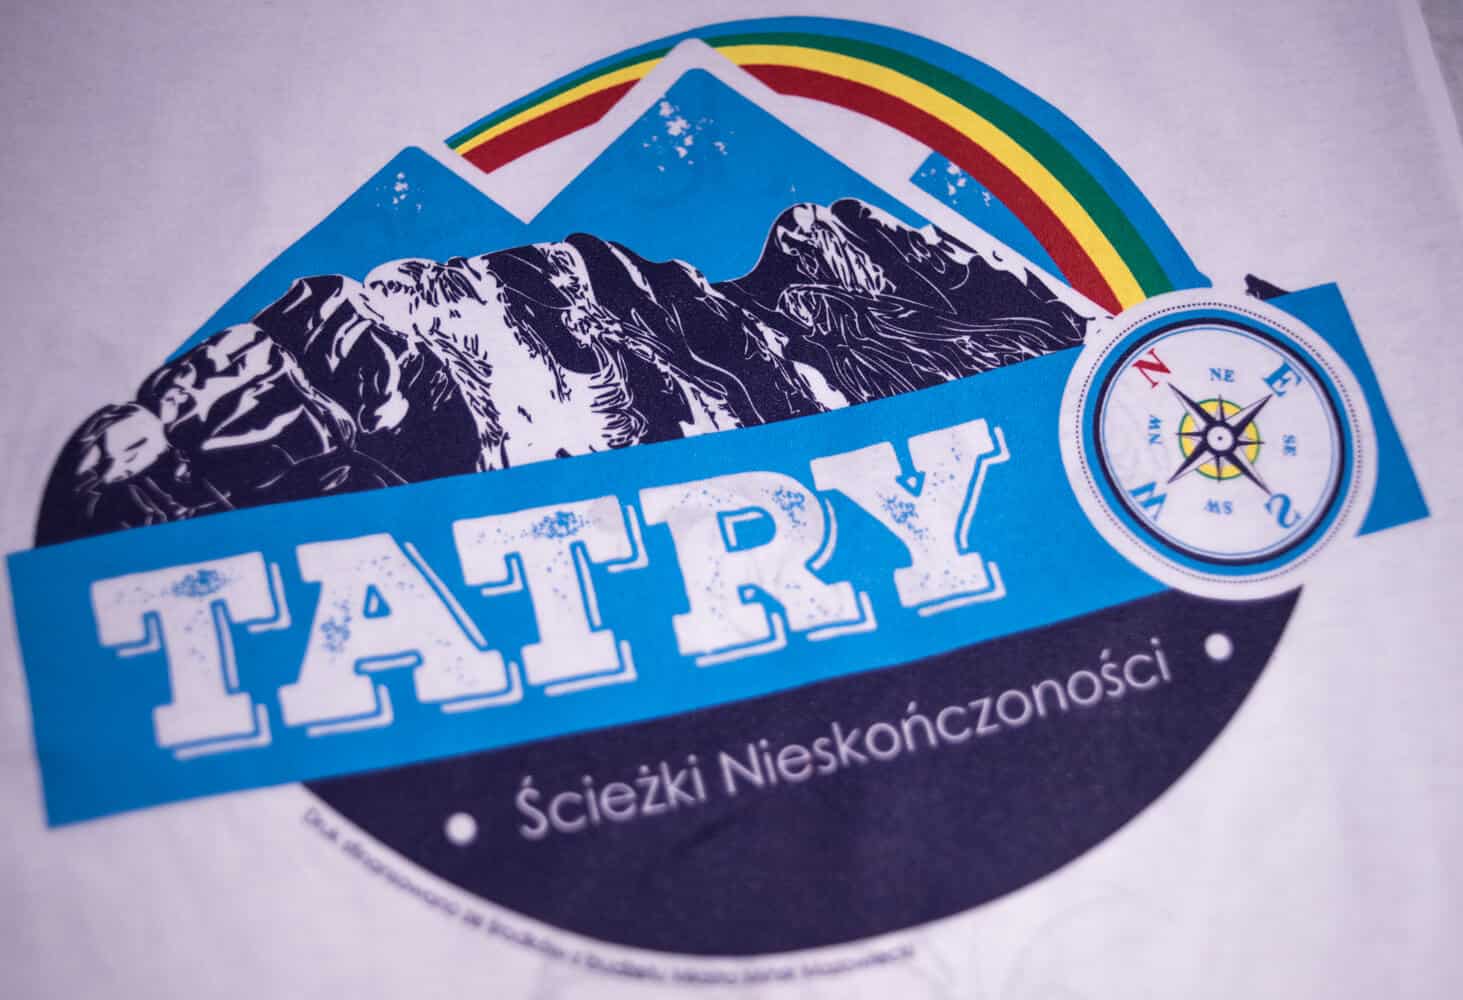 Tatra Paths of Infinity